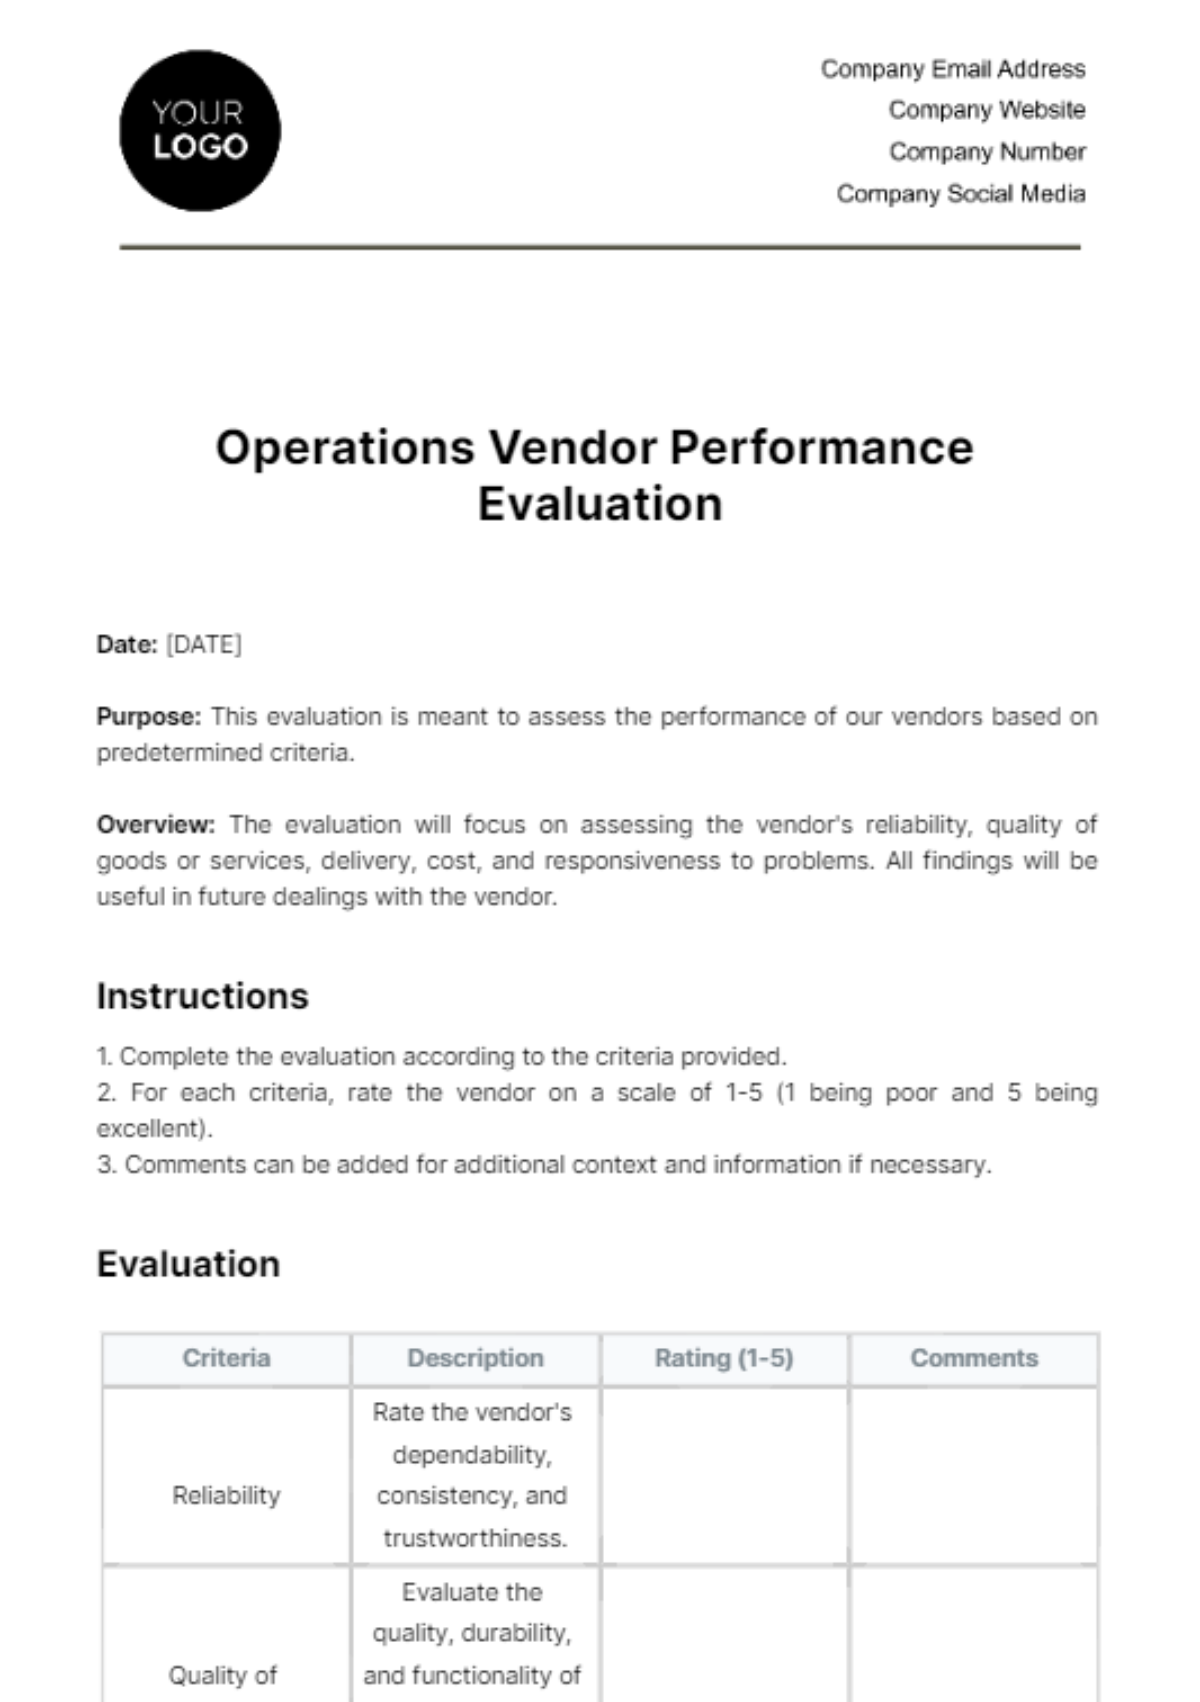 Operations Vendor Performance Evaluation Template